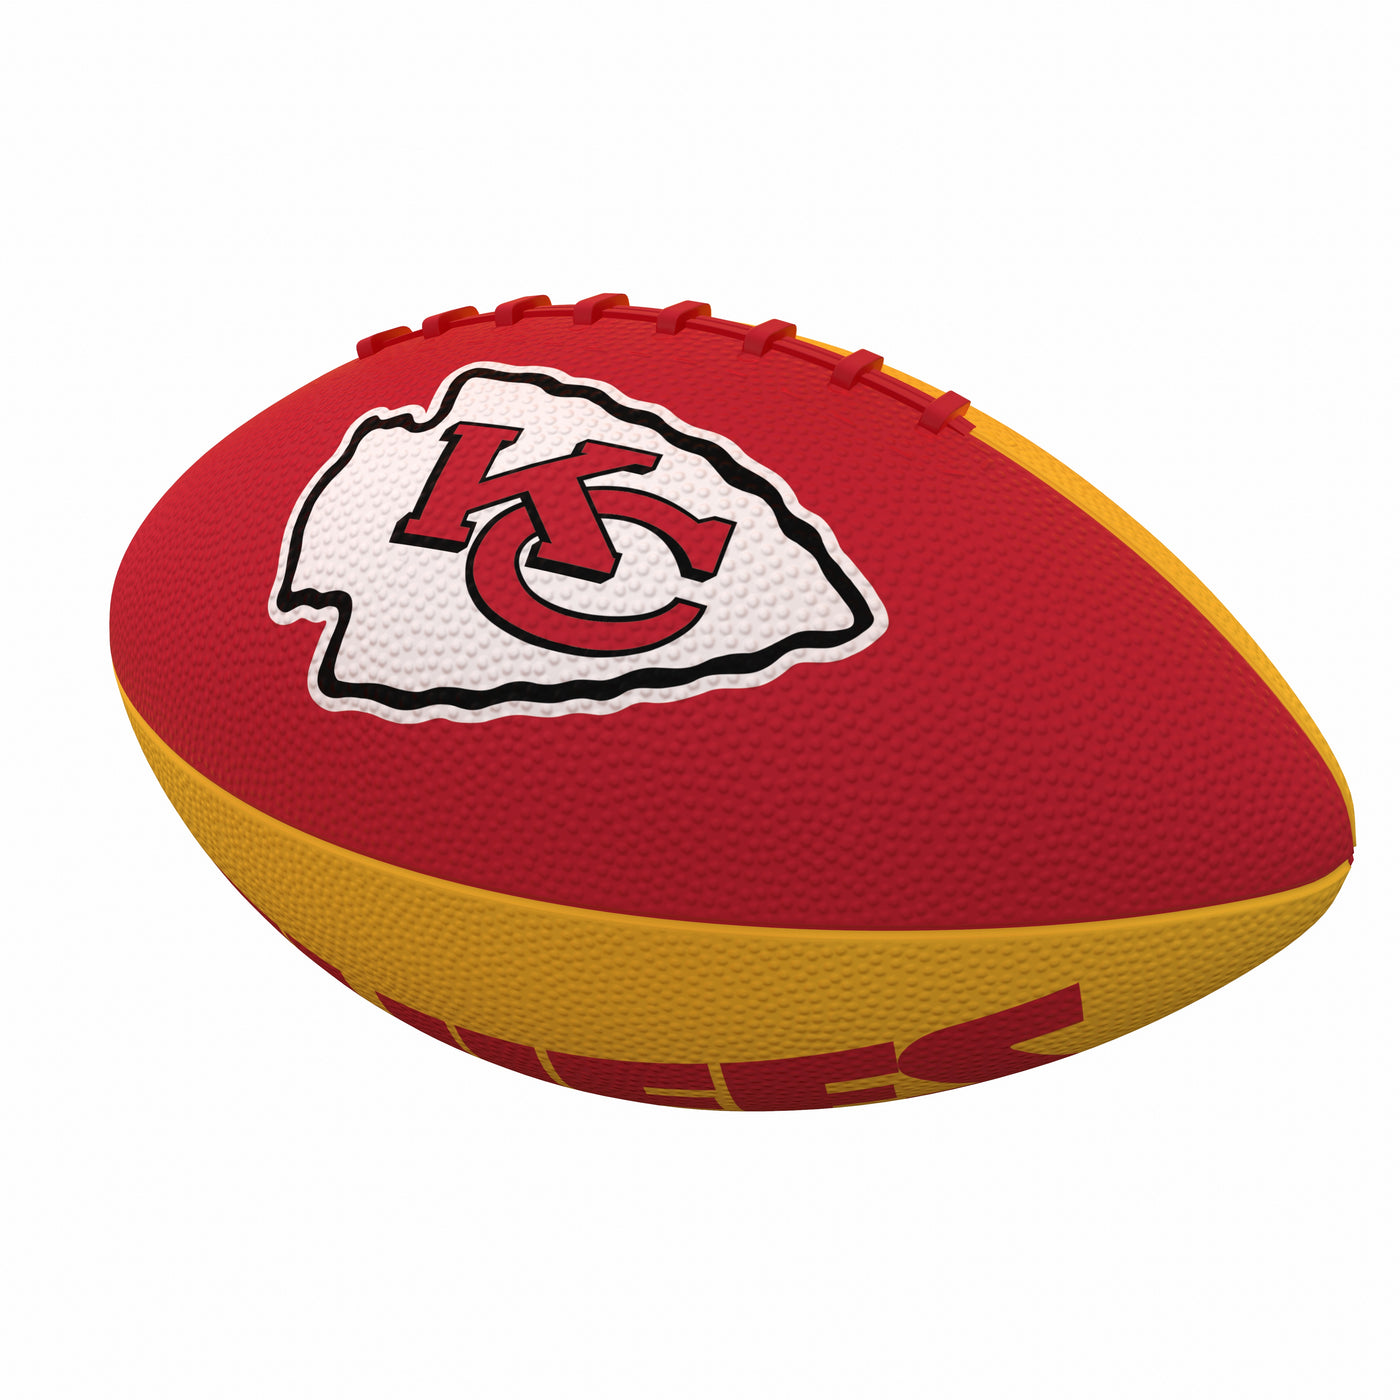 Kansas City Chiefs Pinwheel Logo Junior-Size Rubber Football